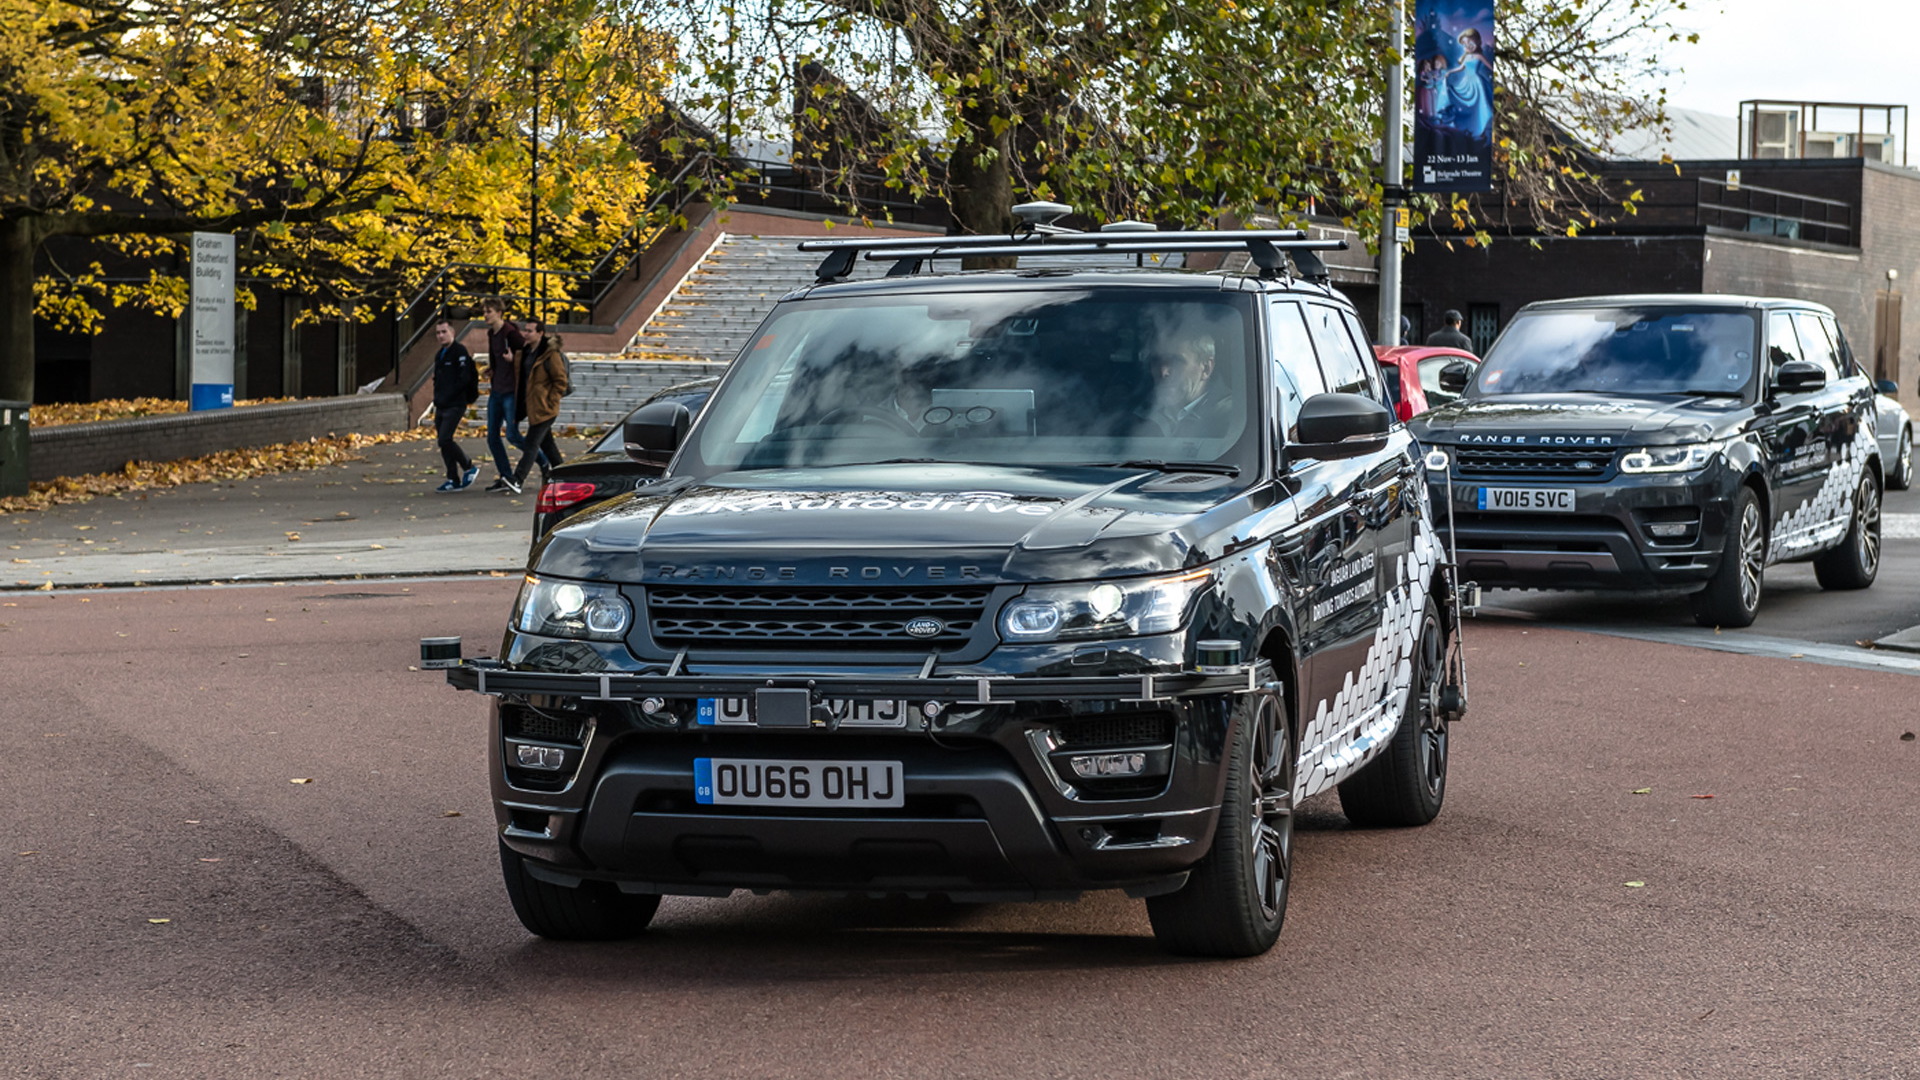 Self-driving Jaguar Land Rover prototypes testing on public roads